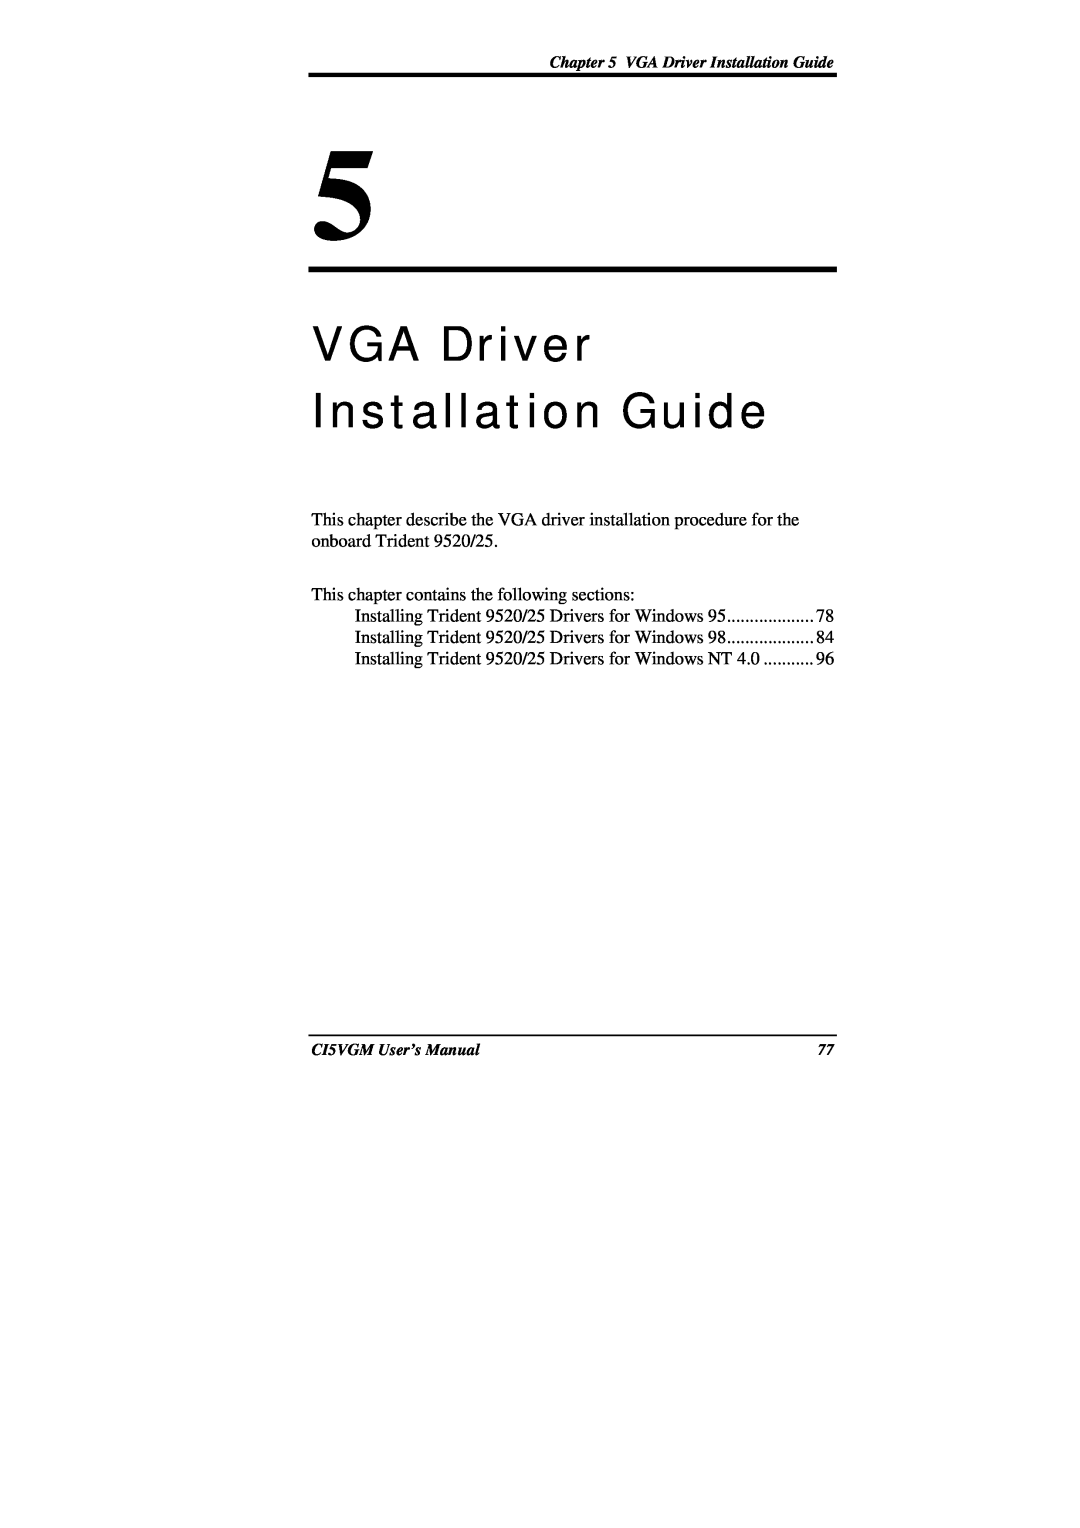 IBM CI5VGM Series VGA Driver Installation Guide, This chapter describe the VGA driver installation procedure for the 